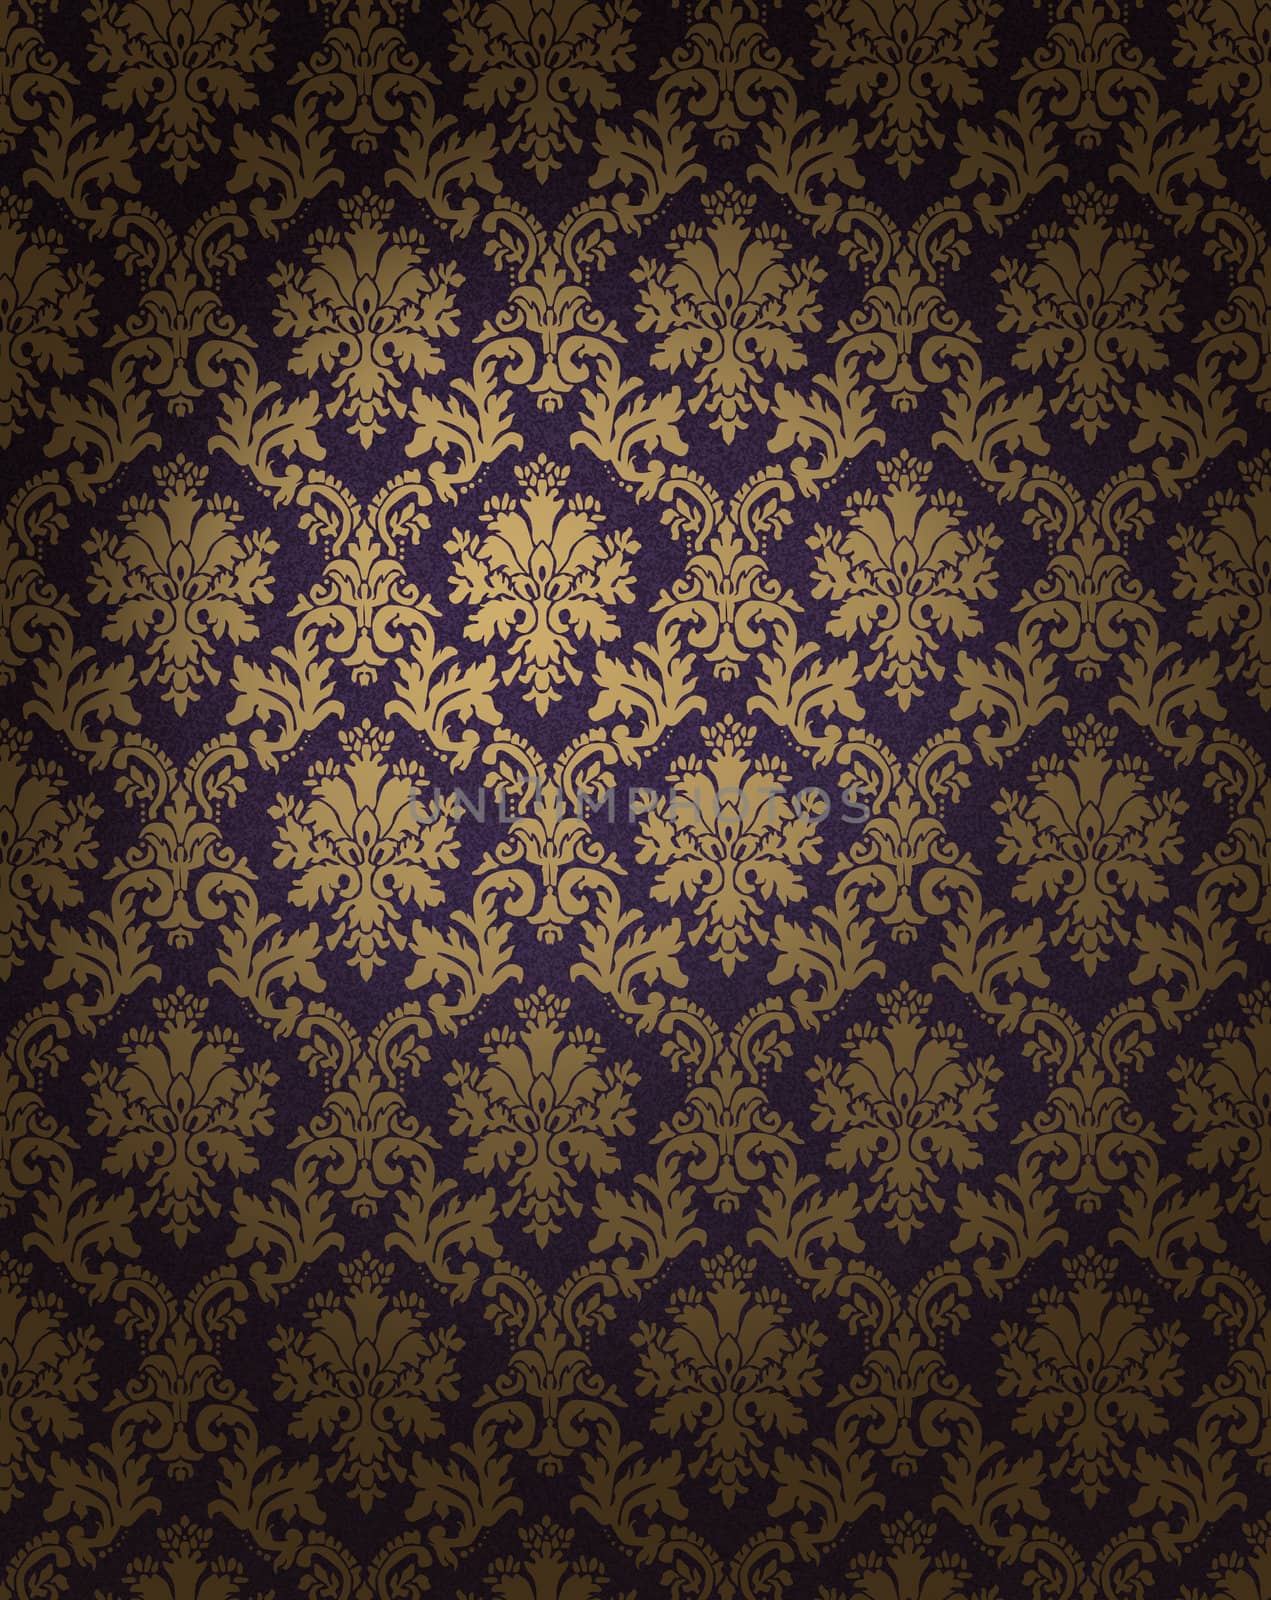 Soft light spot on golden damask pattern wall paper